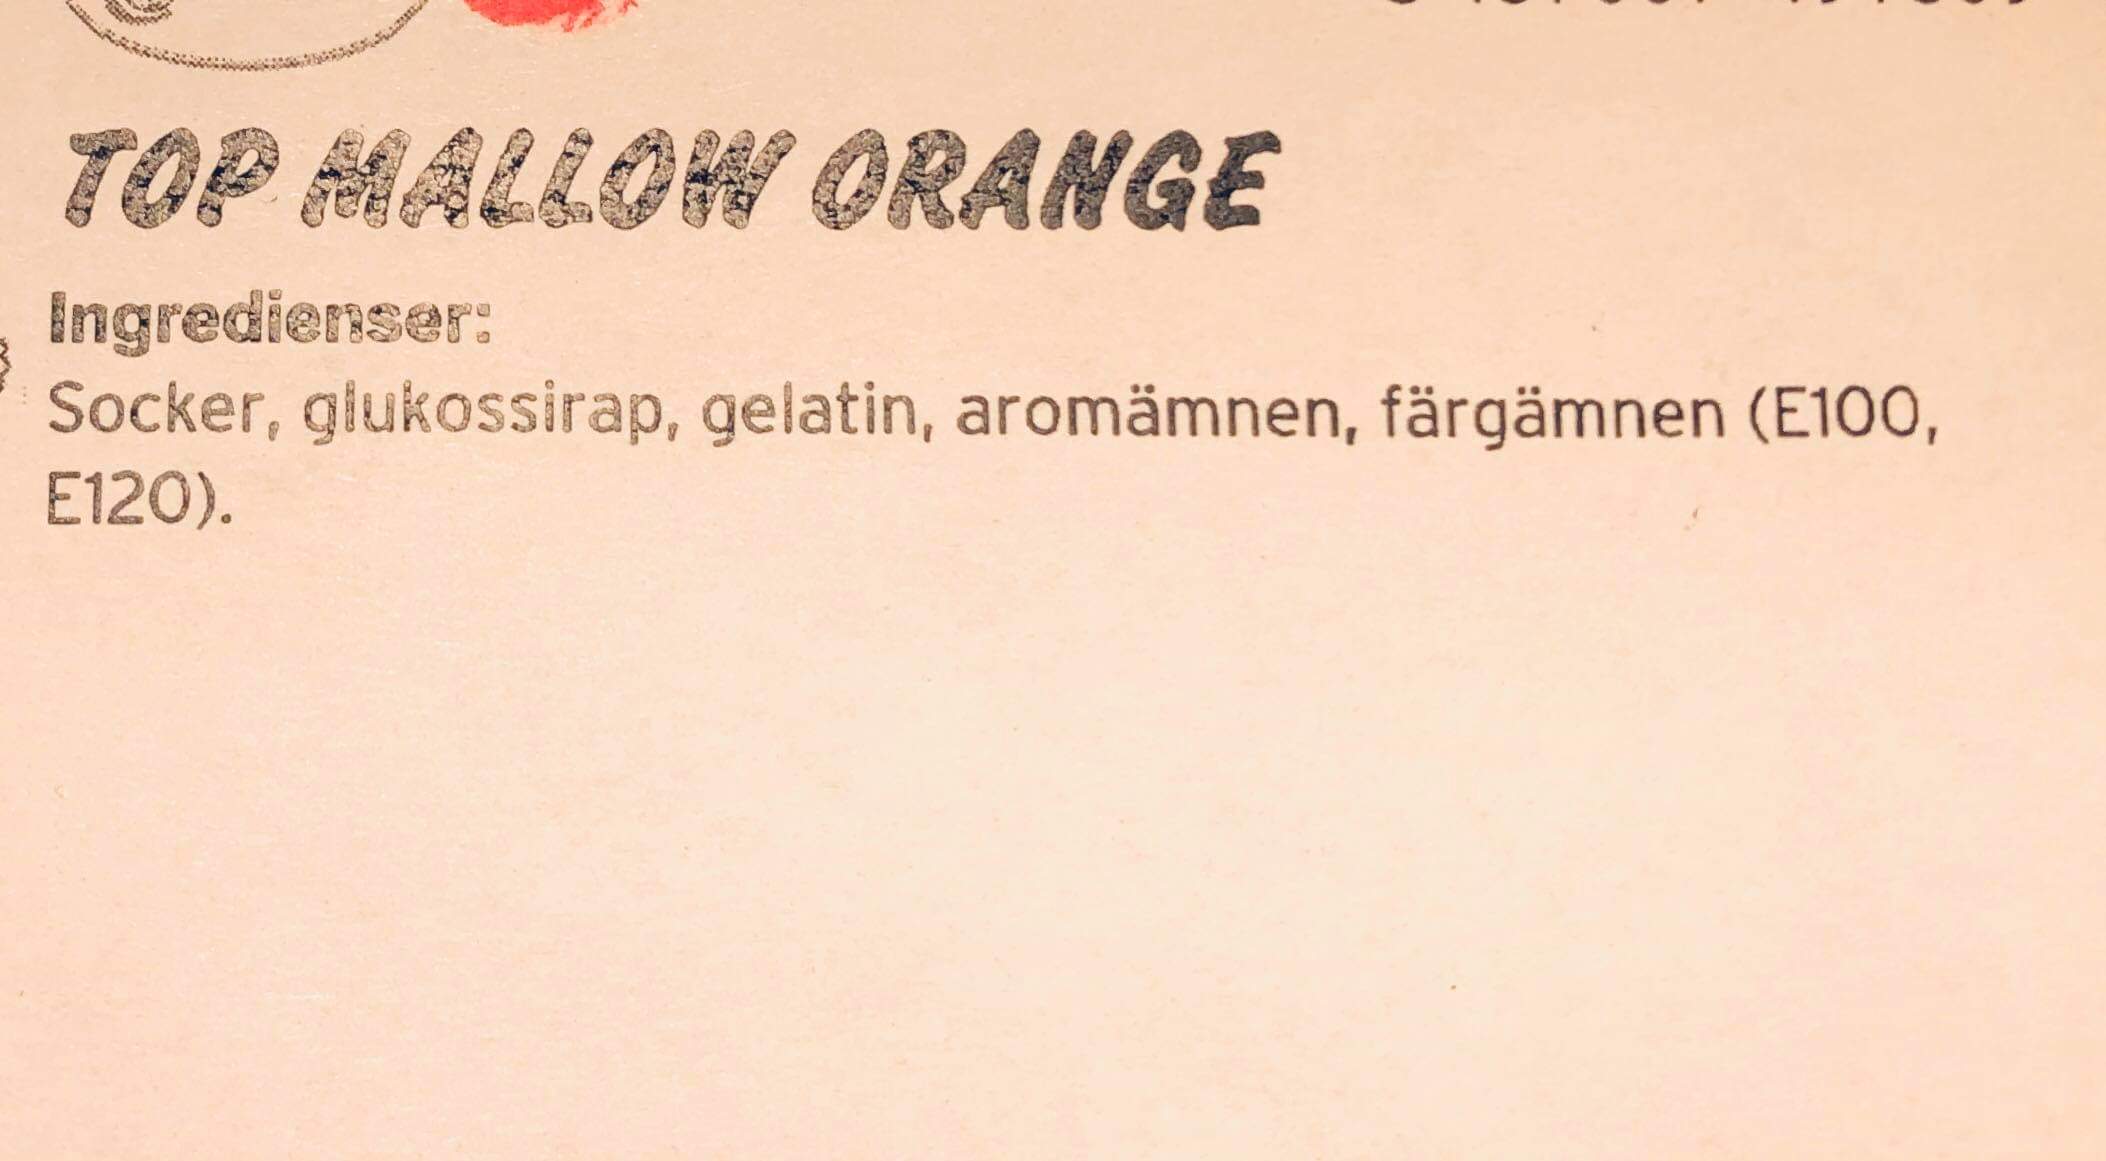 Top mallow orange